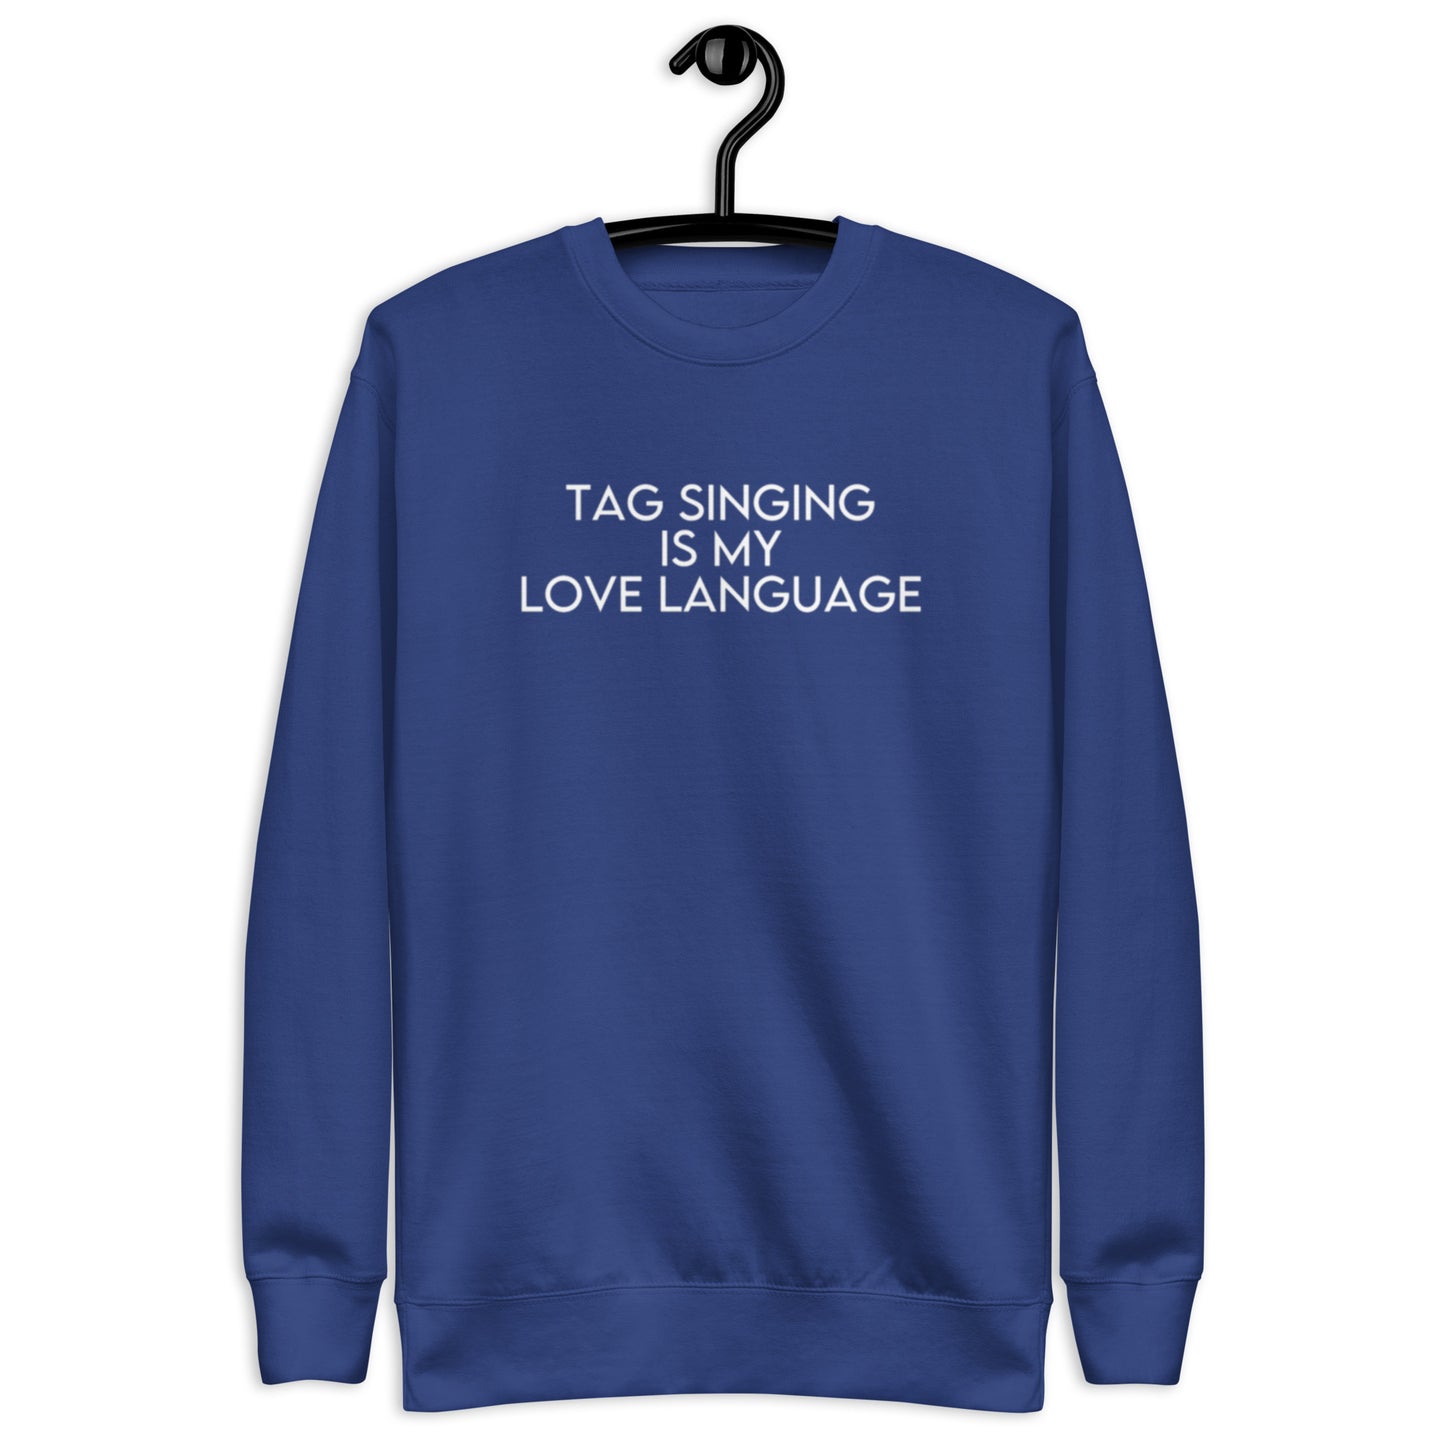 Tag singing is my love language - Screen printed Unisex Premium Sweatshirt